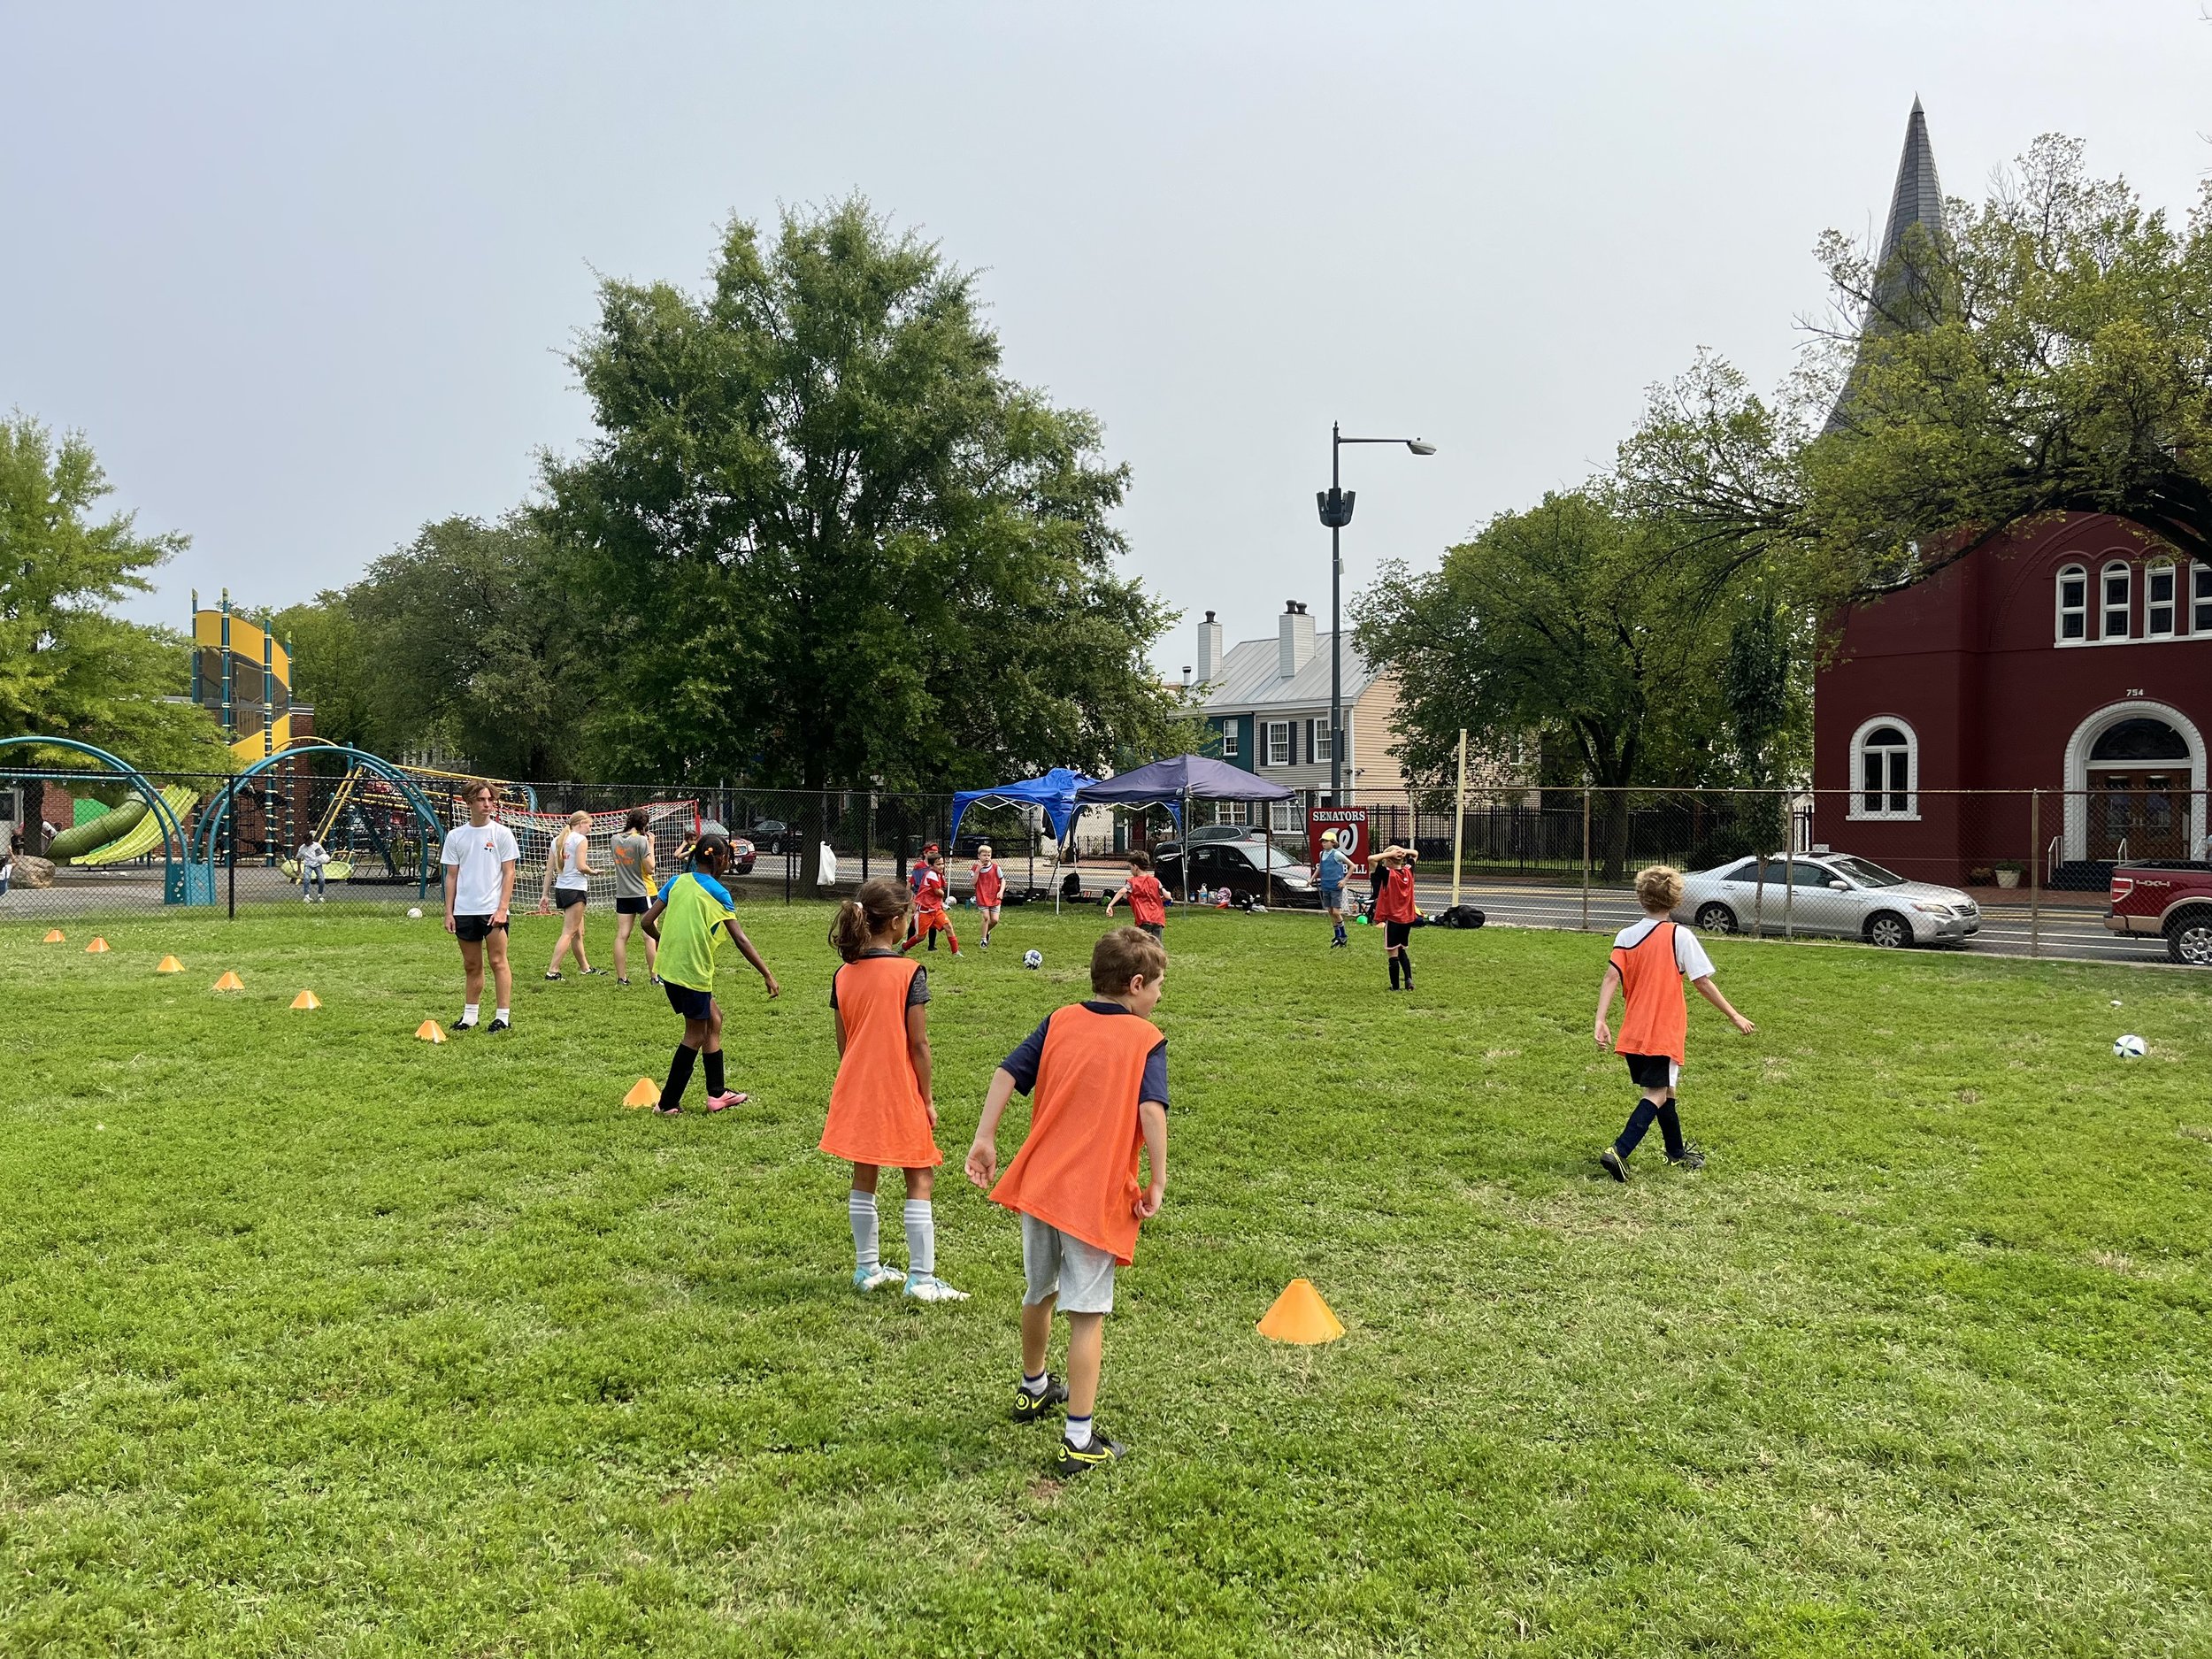 Dc-way-soccer-club-for-kids-in-washington-dc-summer-camp-at-tyler-elementary-school- 9230.jpeg